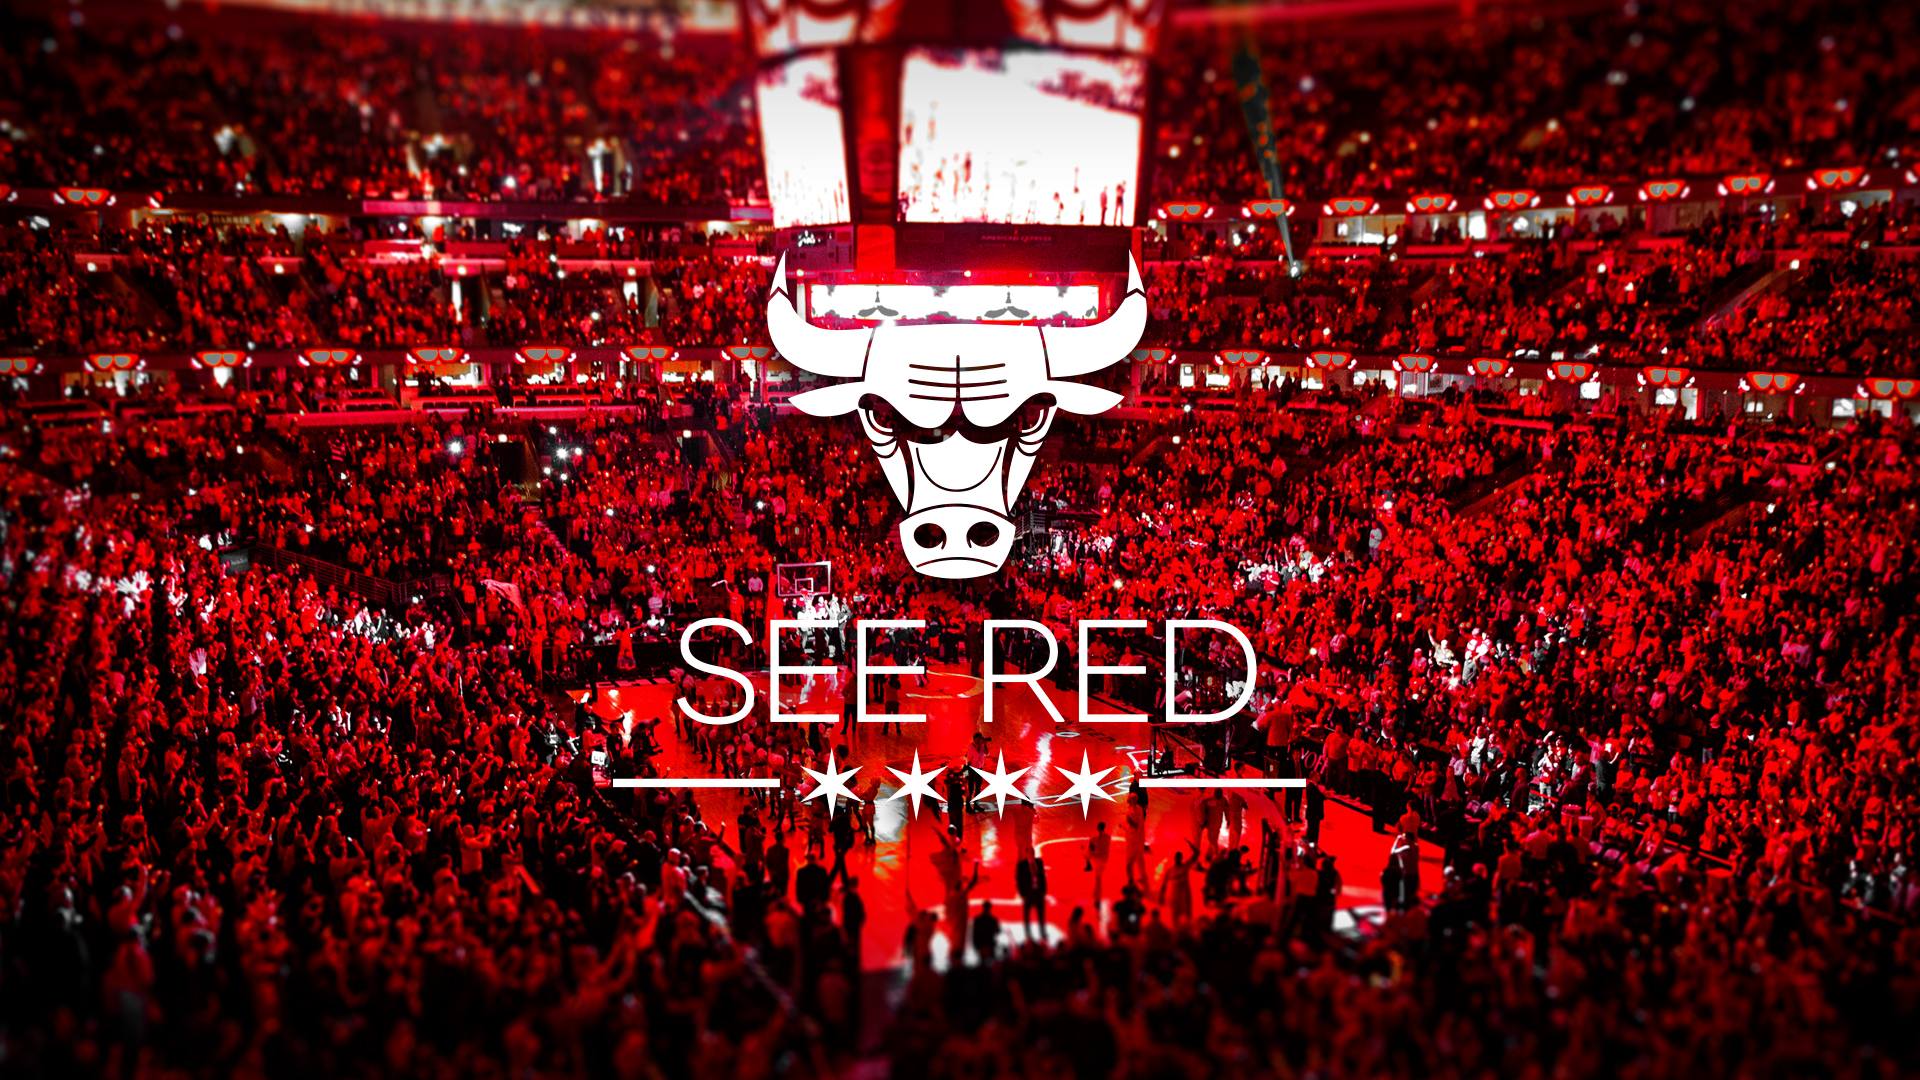 Chicago Bulls wallpaper HD free download